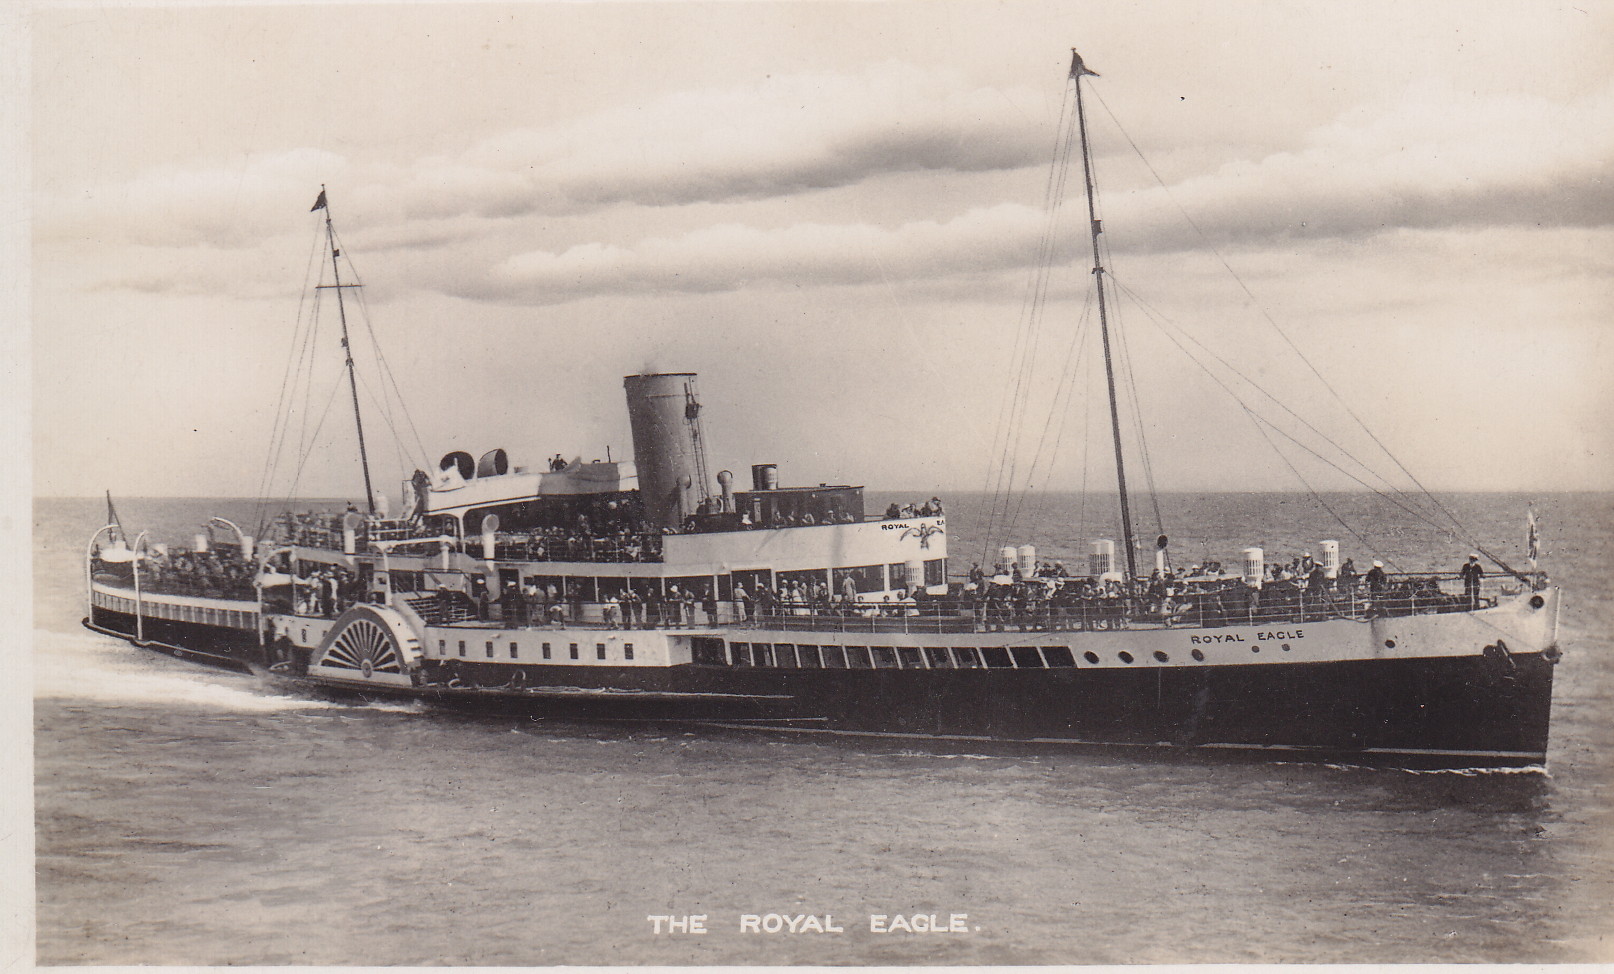 The Royal Eagle paddle steamer